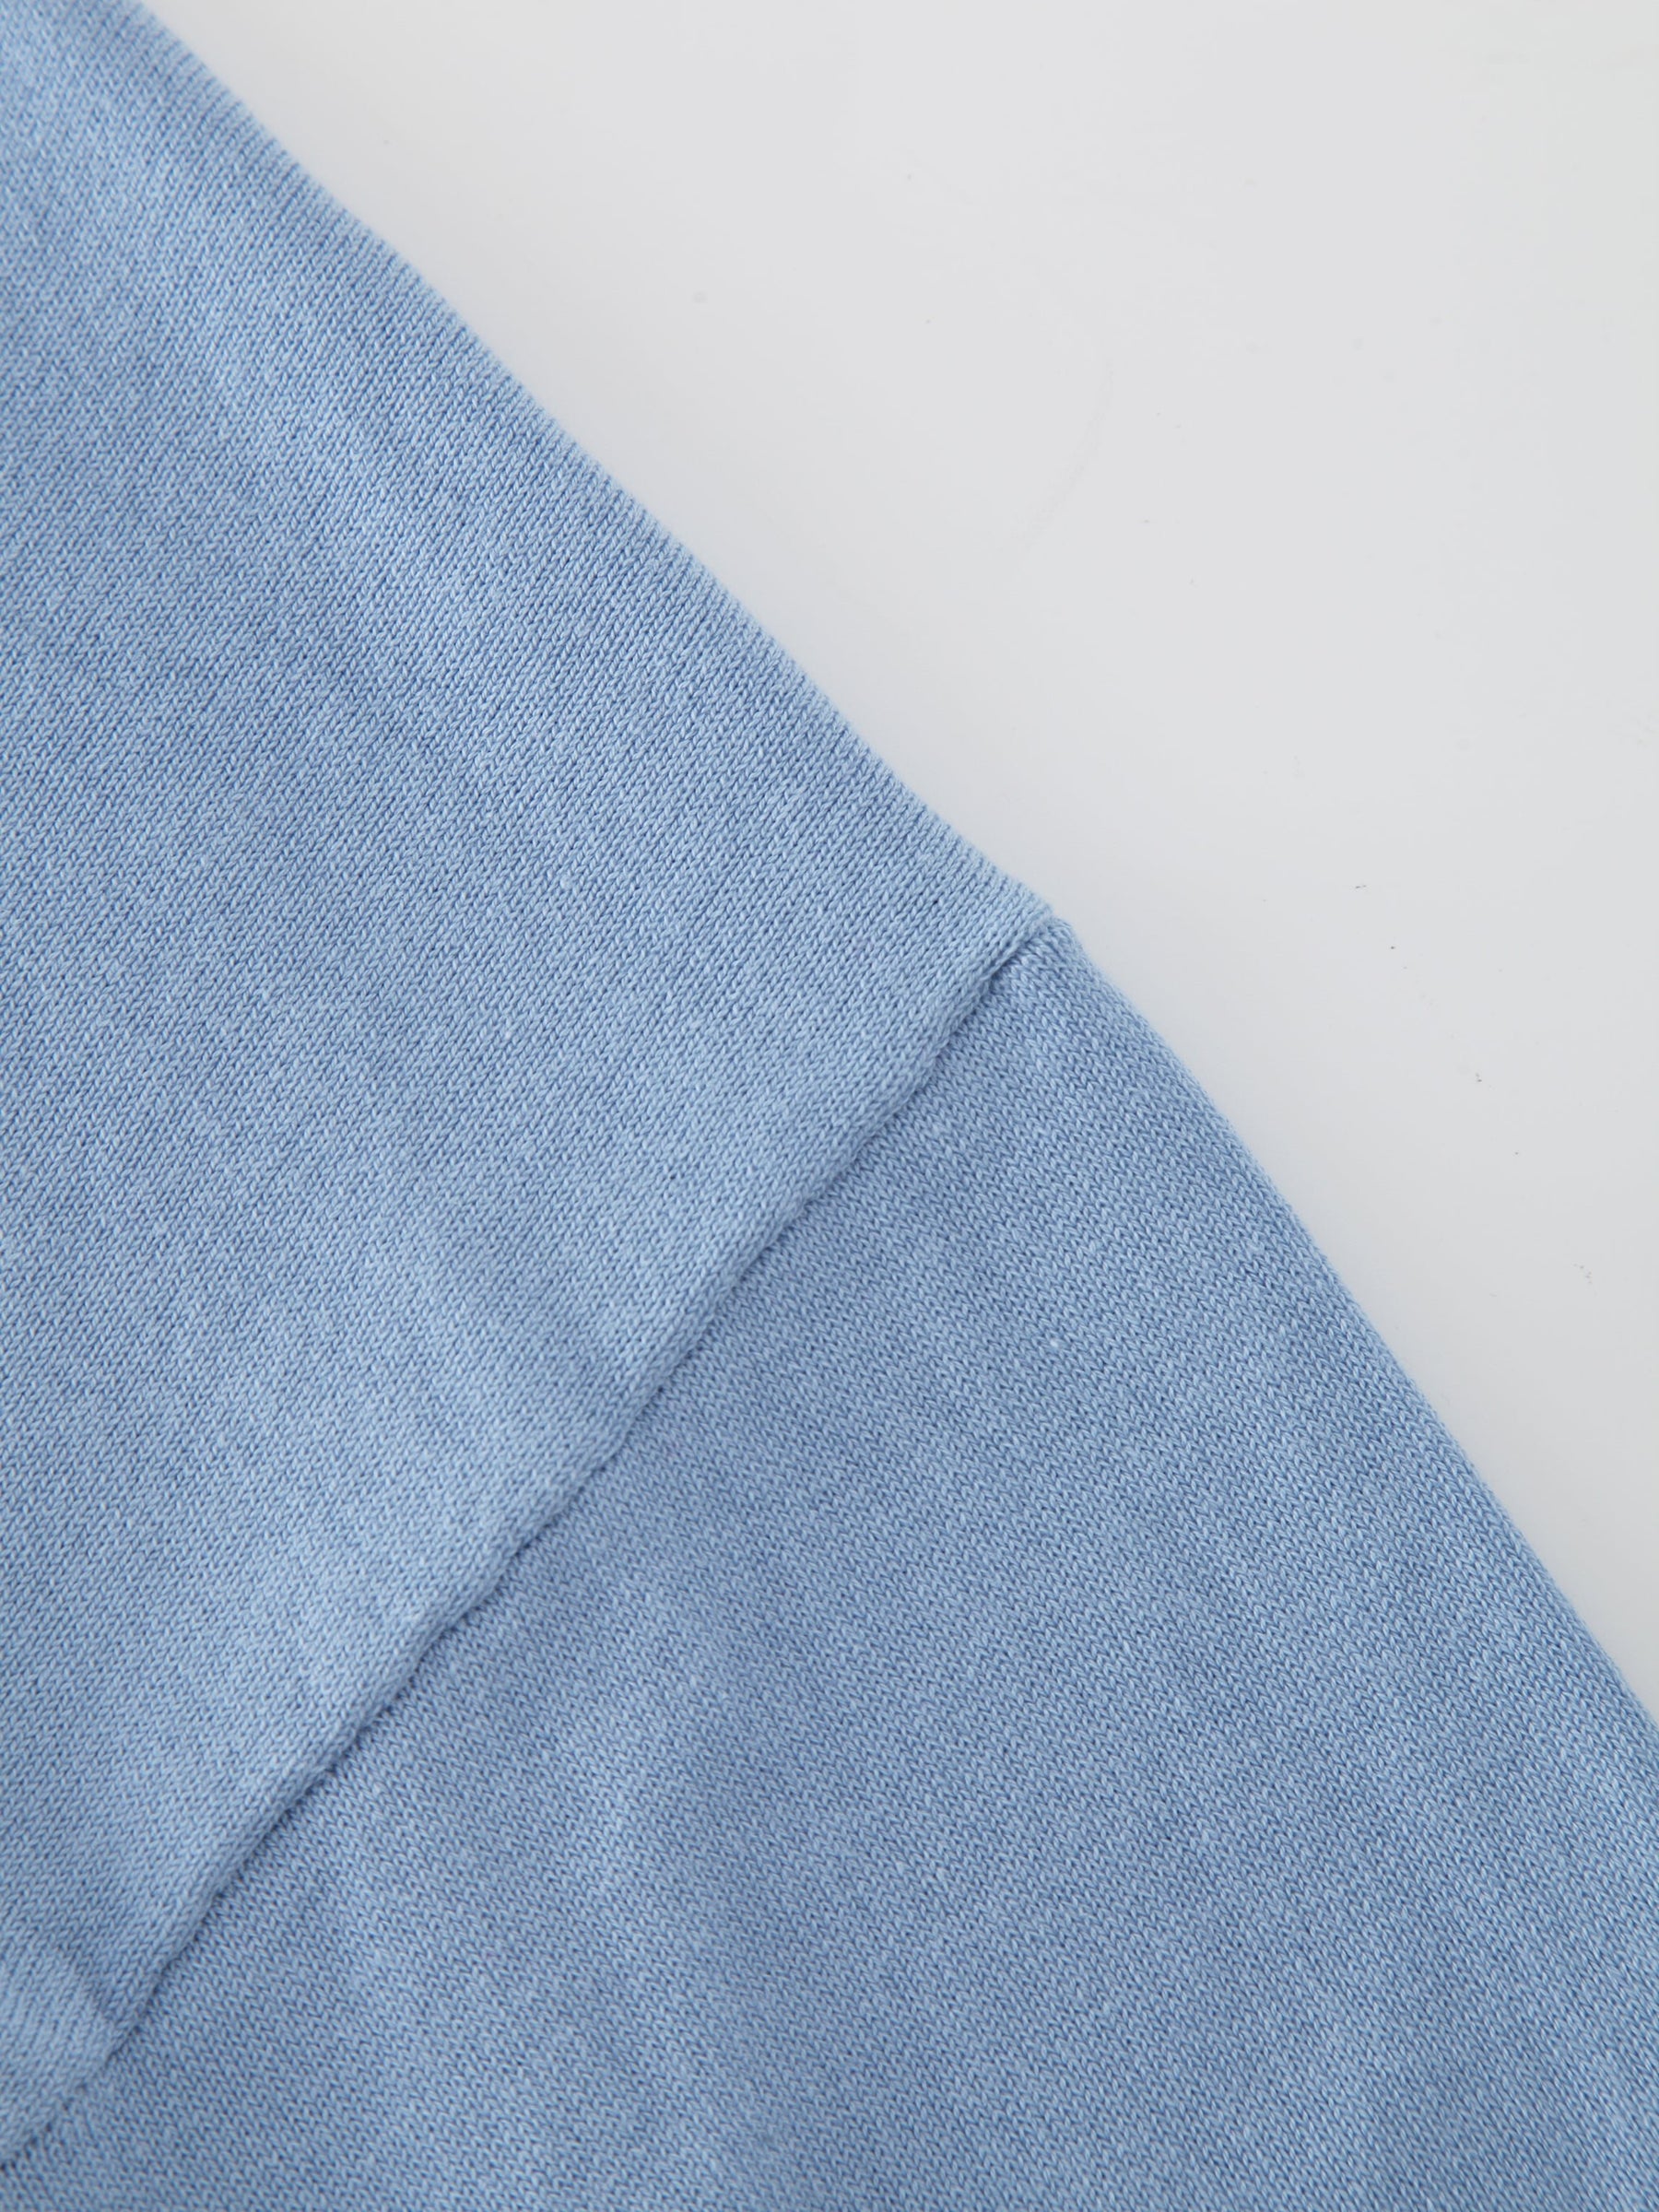 Jersey ligero extragrande-Azul claro